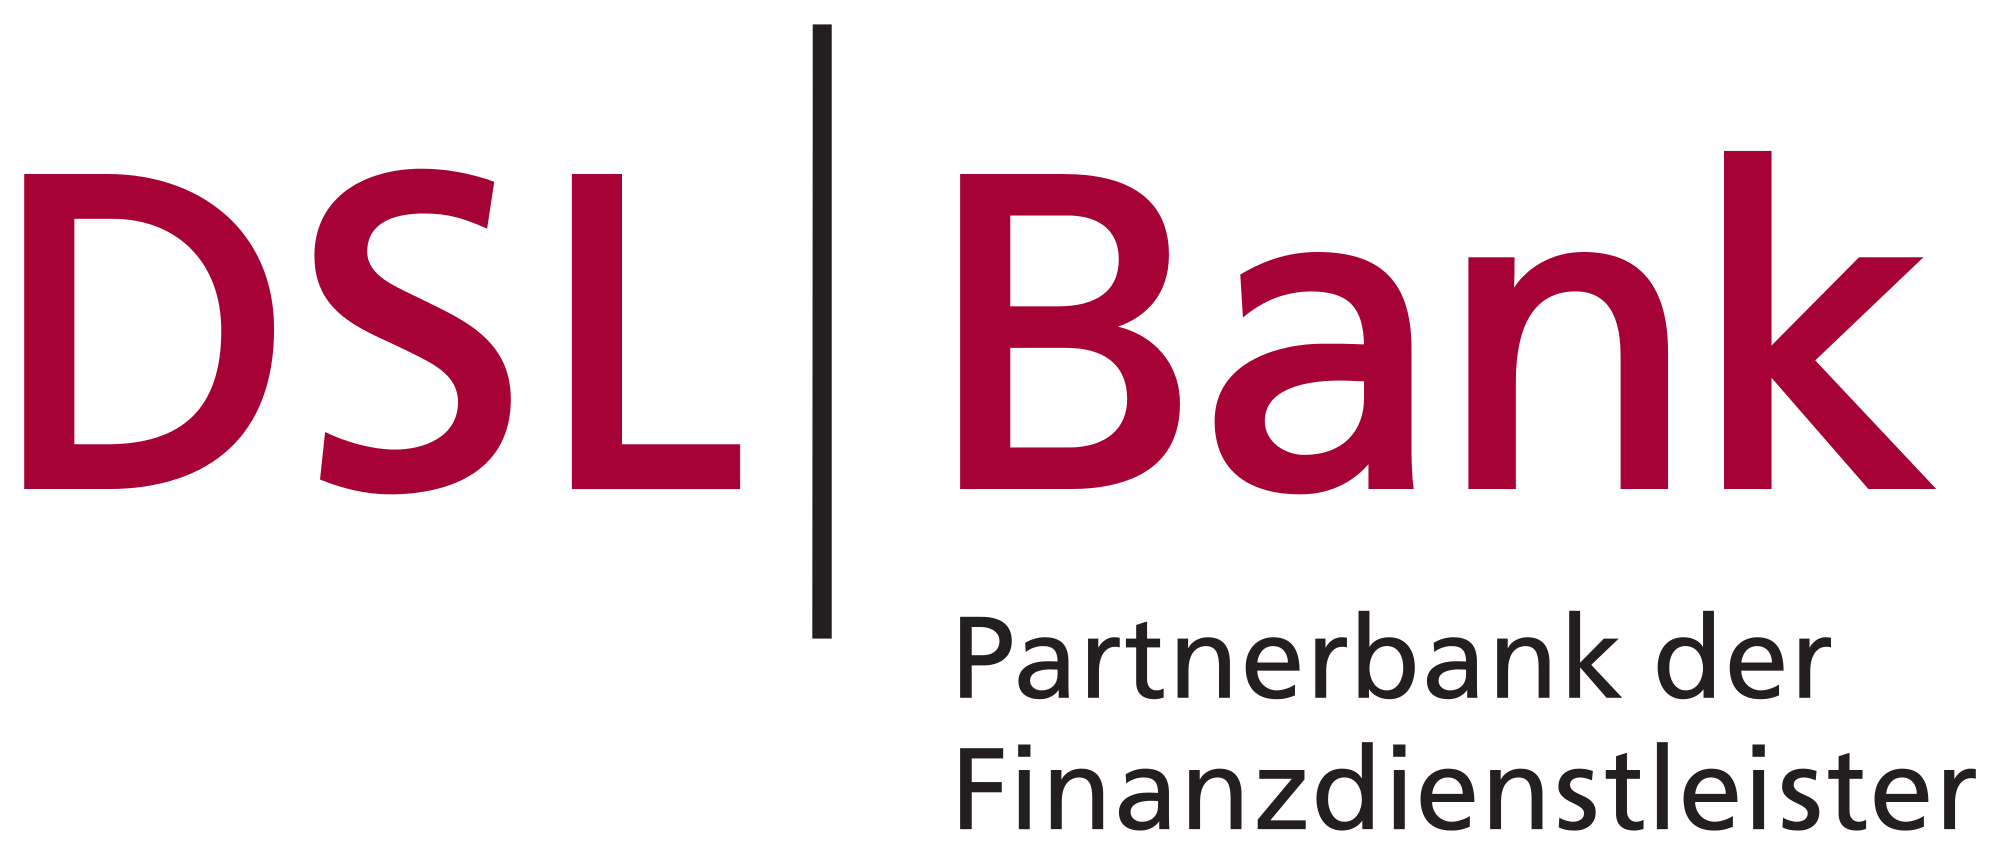 DSL Logo - DSL Bank logo.svg